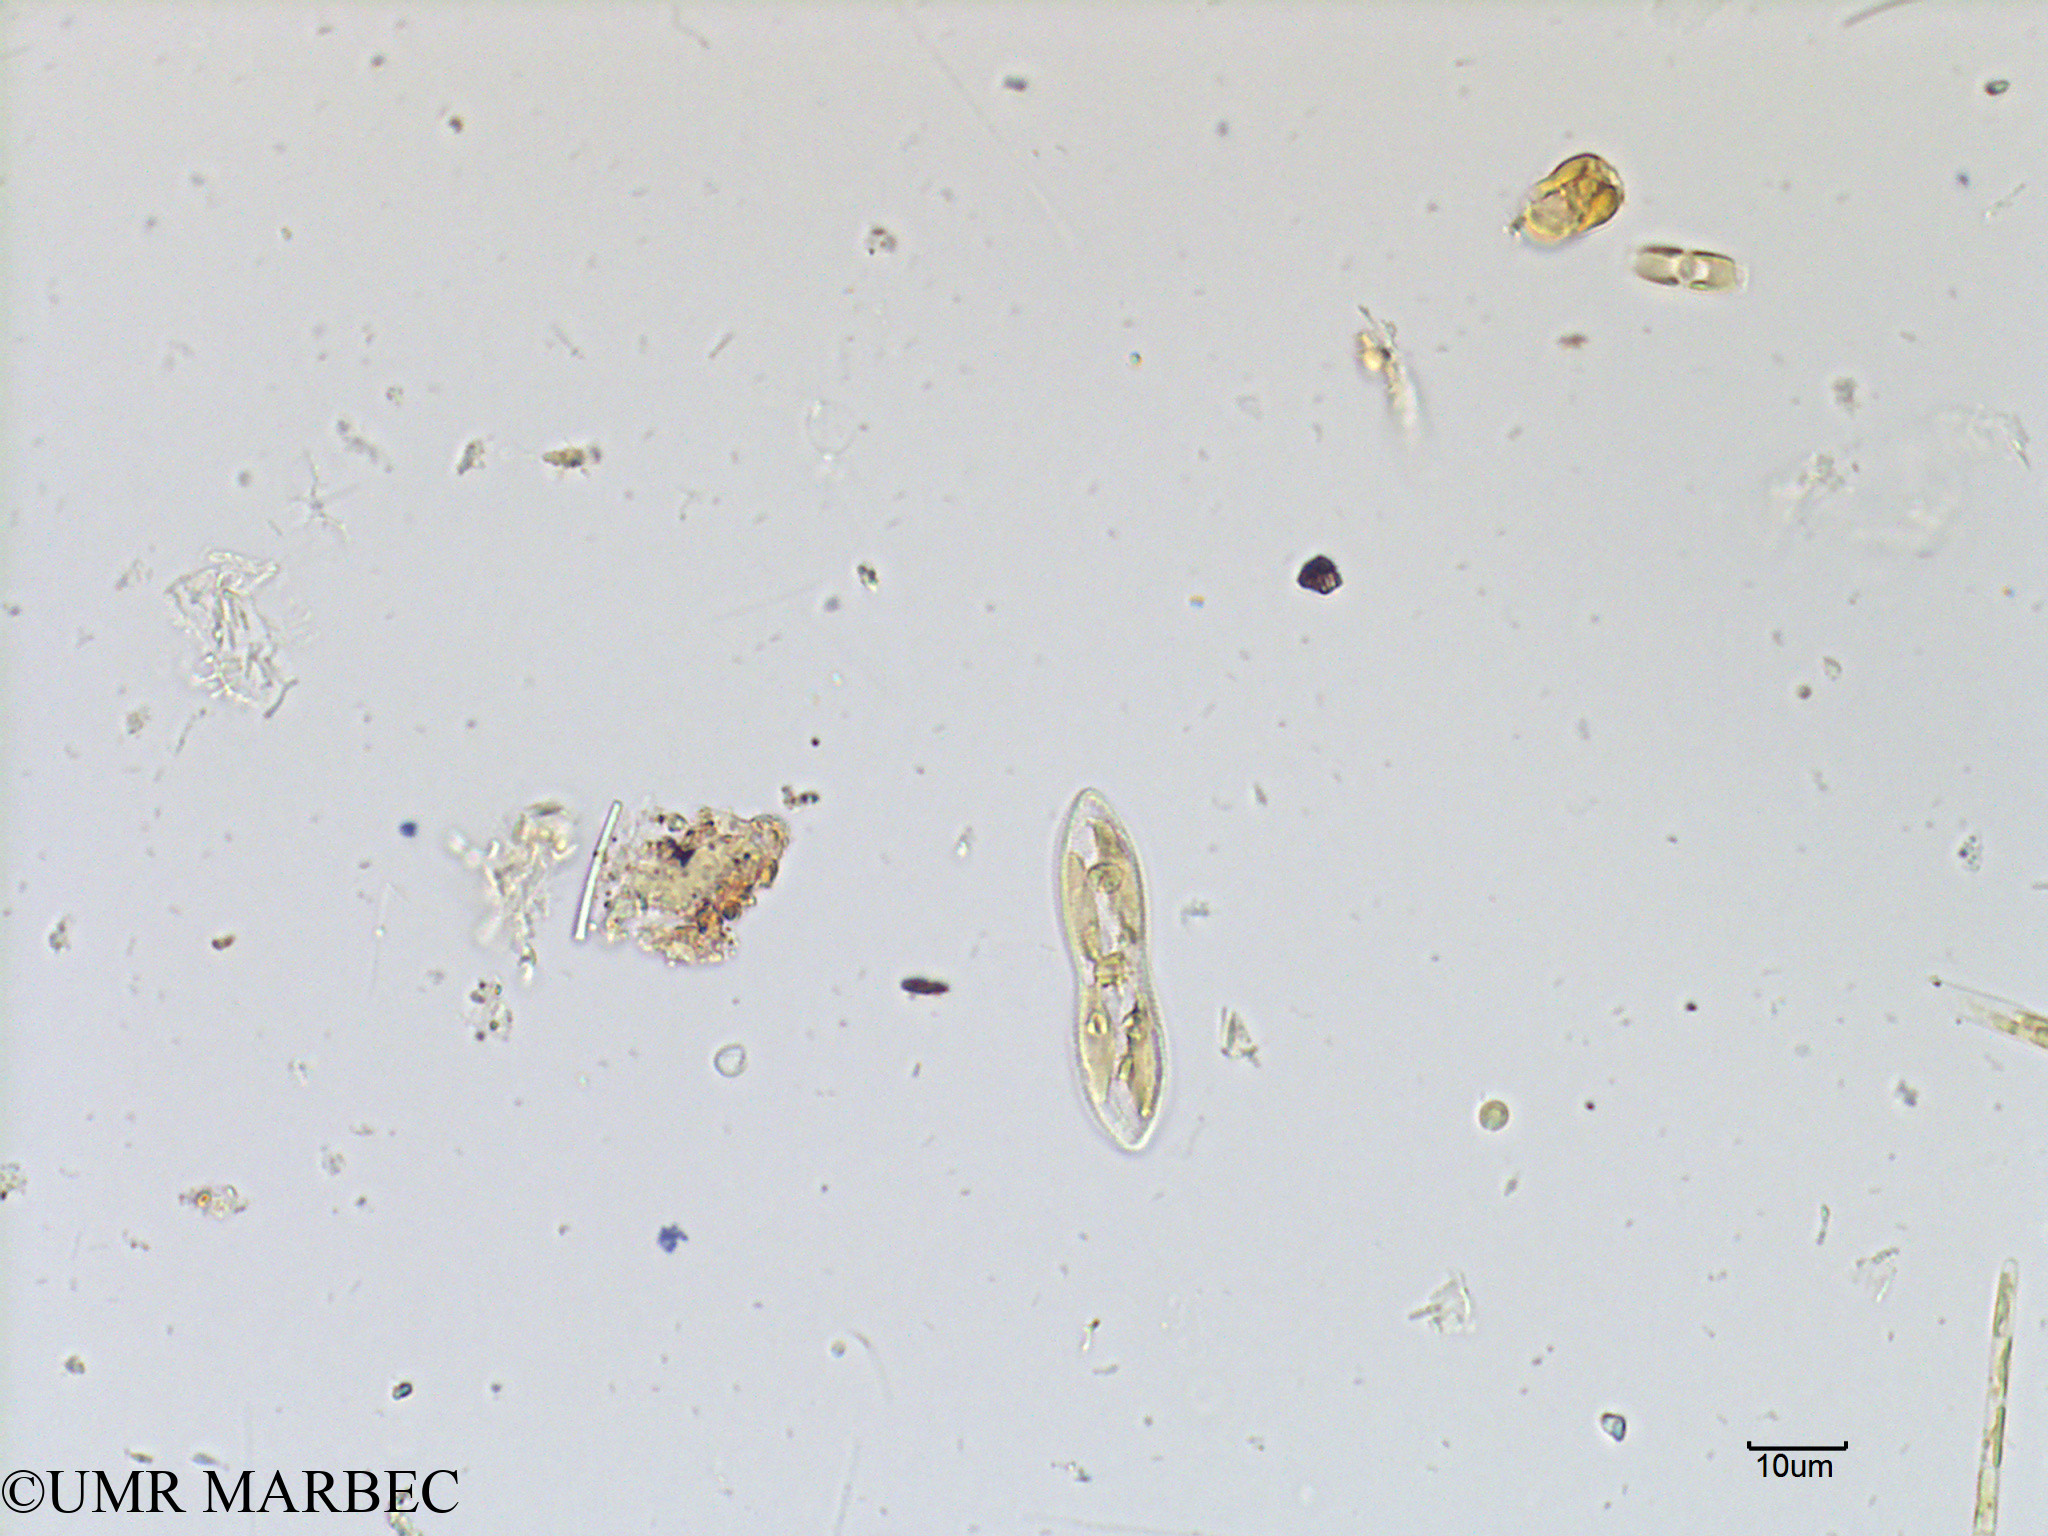 phyto/Scattered_Islands/mayotte_lagoon/SIREME May 2016/Diploneis spp (old Navicula sp17 -MAY5_diploneis-3).tif(copy).jpg